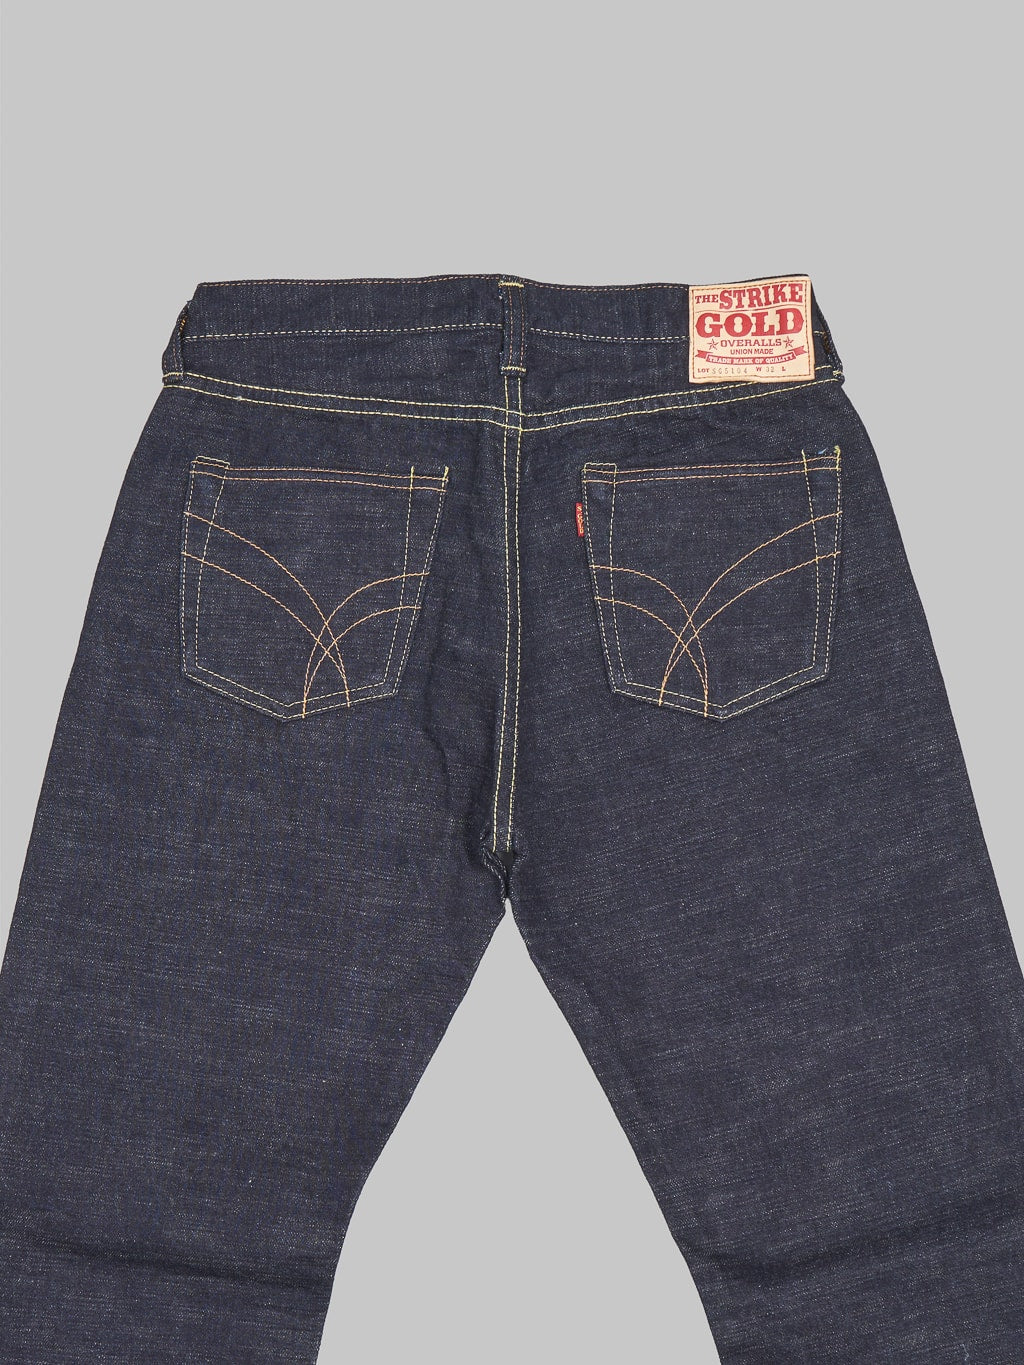 The Strike Gold 5104 Slub Grey Weft Straight Tapered Jeans back pockets